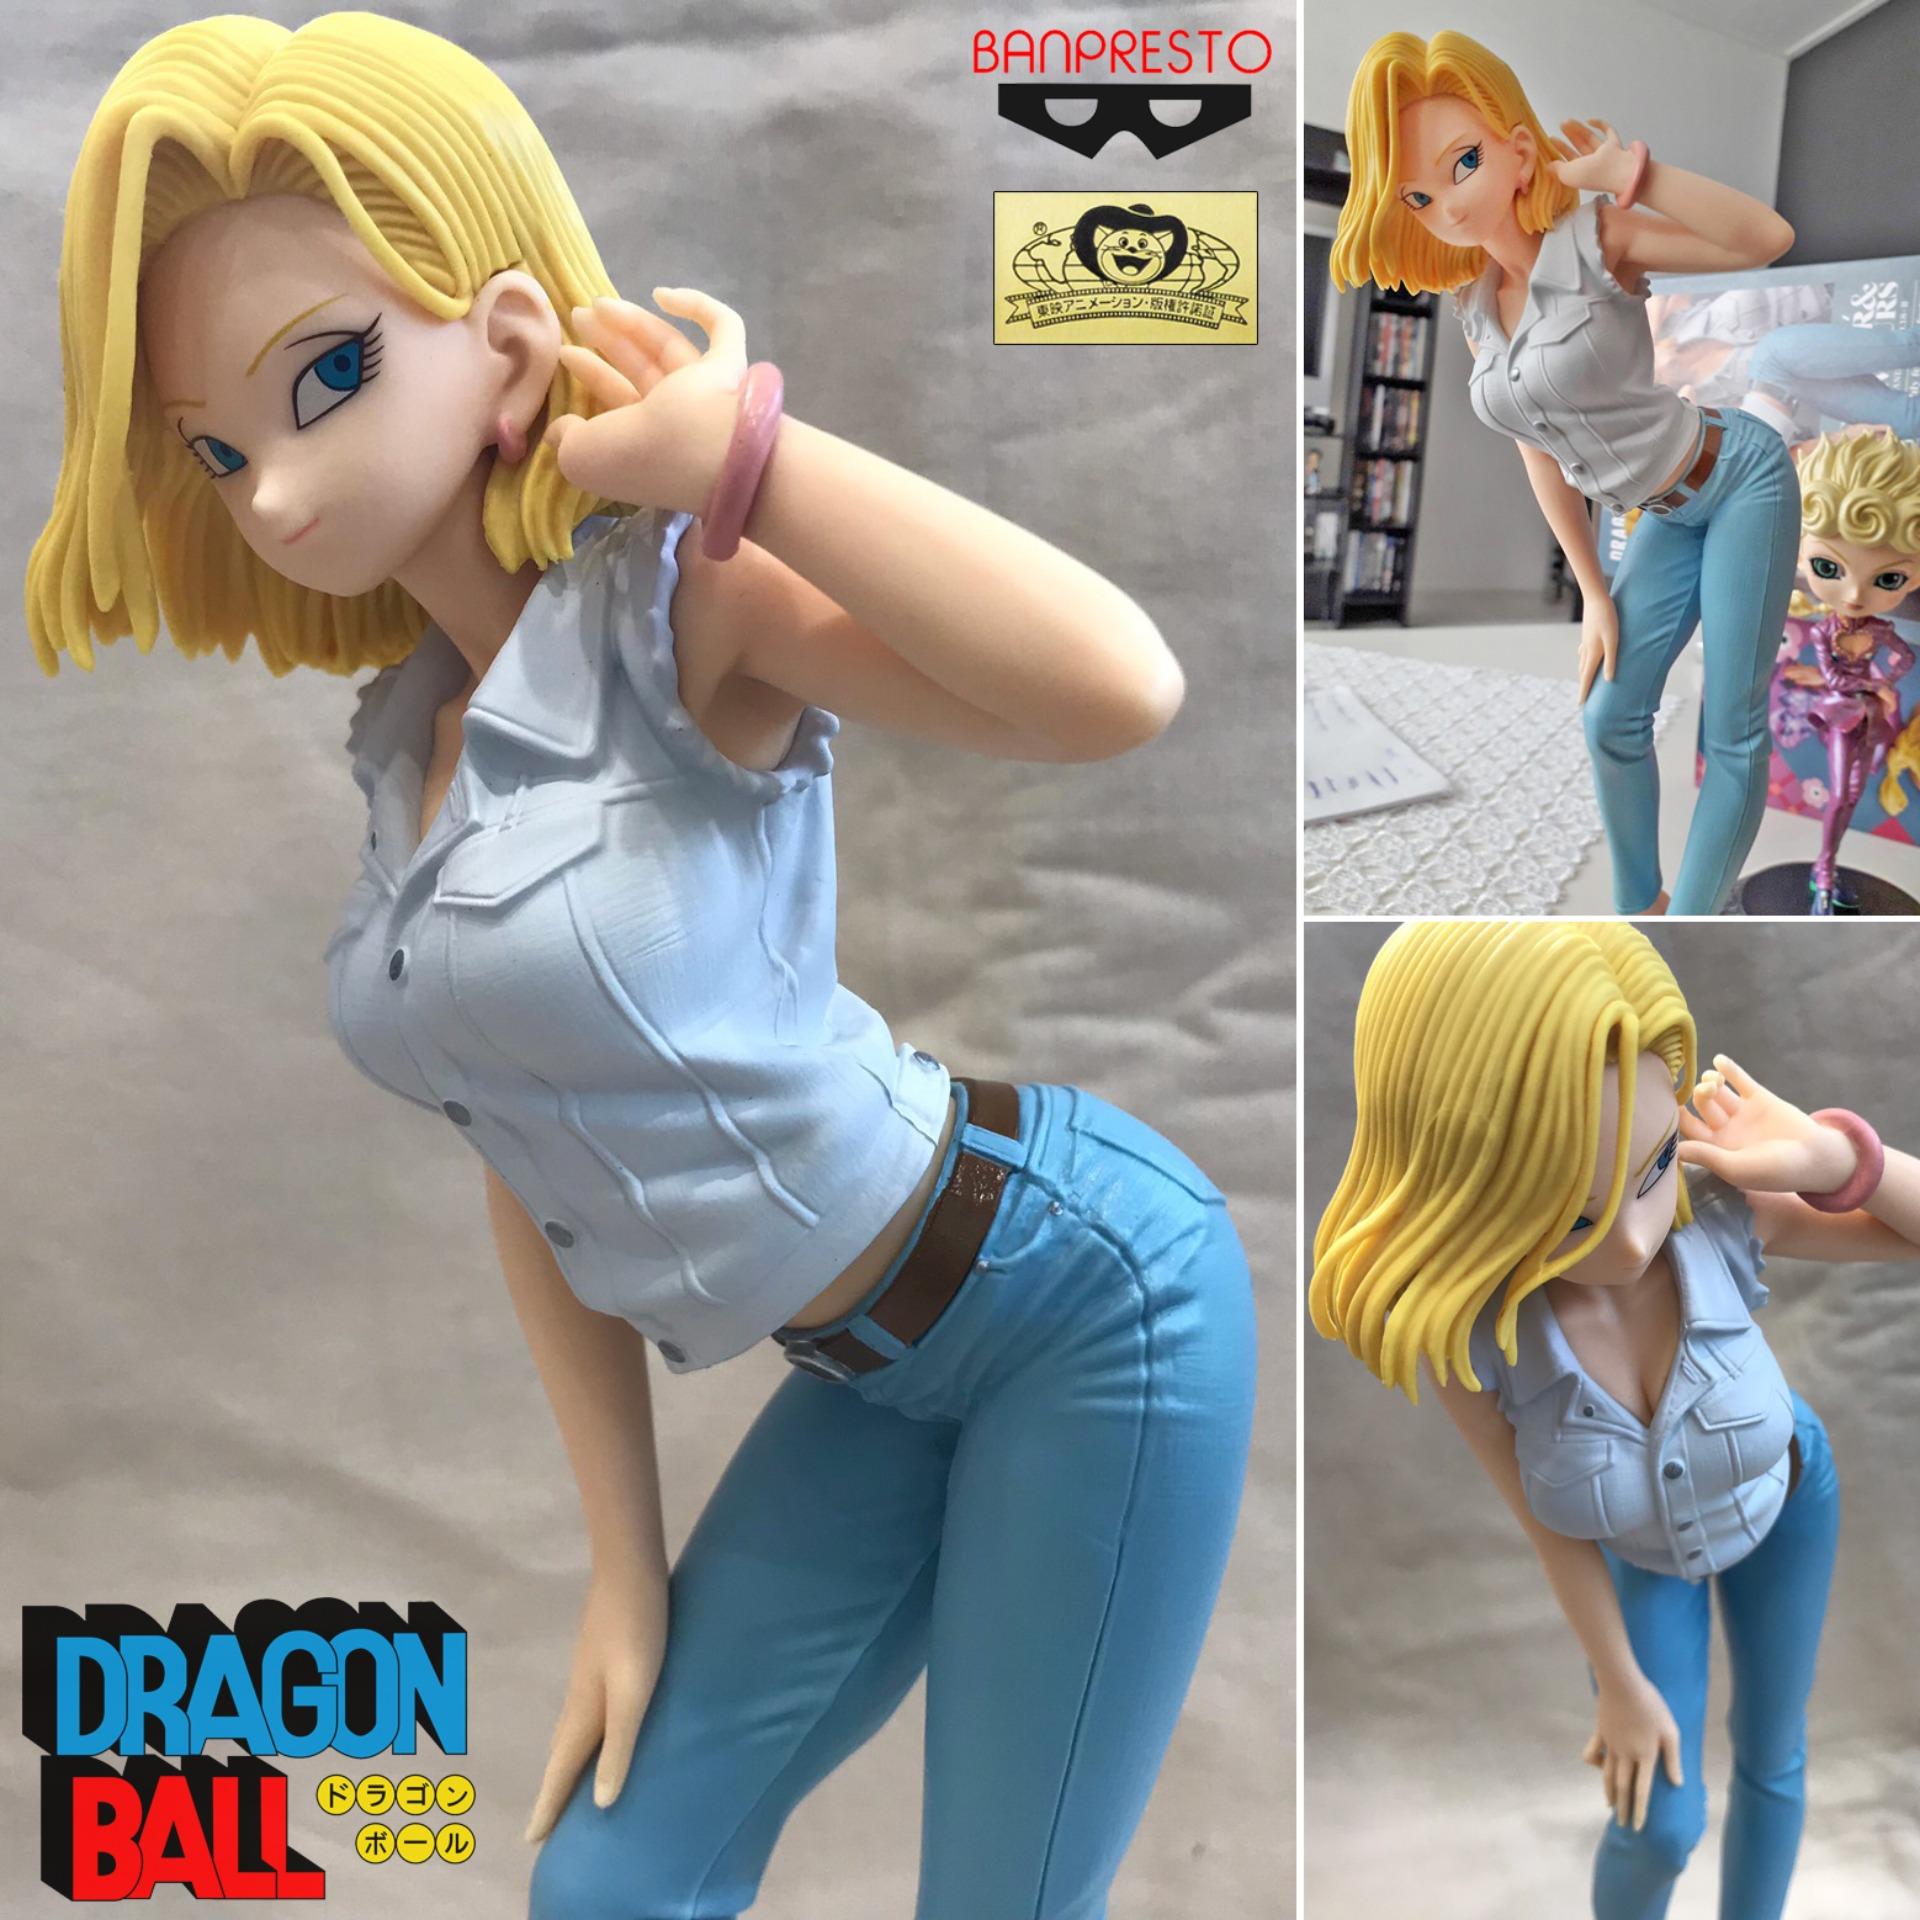 Model โมเดล งานแท้ 100% แมวทอง Banpresto จากการ์ตูน Dragon Ball Z ดราก้อนบอล แซต Glitter & Glamours Android 18 มนุษย์จักรกล หมายเลข 18 Ver Figure ฟิกเกอร์ Anime ของขวัญ Gift อนิเมะ การ์ตูน มังงะ Doll ตุ๊กตา คอลเลกชัน สั่งและนำเข้าจากญี่ปุ่น manga